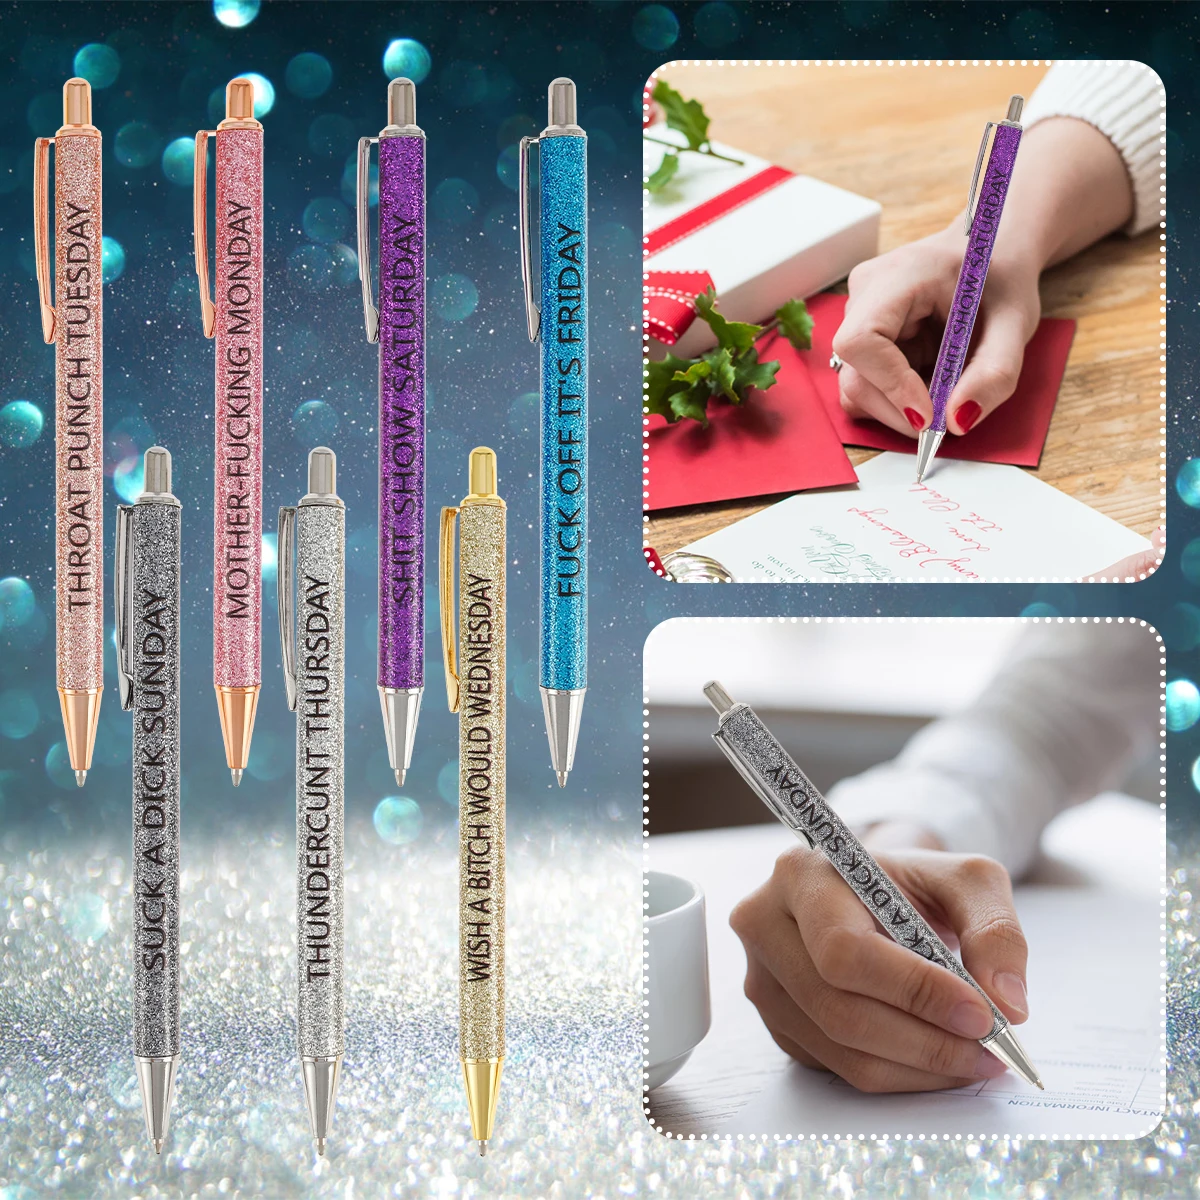 https://ae01.alicdn.com/kf/Sbfdfccff1ee94a36a461b11ff2735cb2F/Ballpoint-pen-set-sparkling-colorful-body-funny-pen-set-14cm-retractable-funny-office-school-teacher-student.jpg